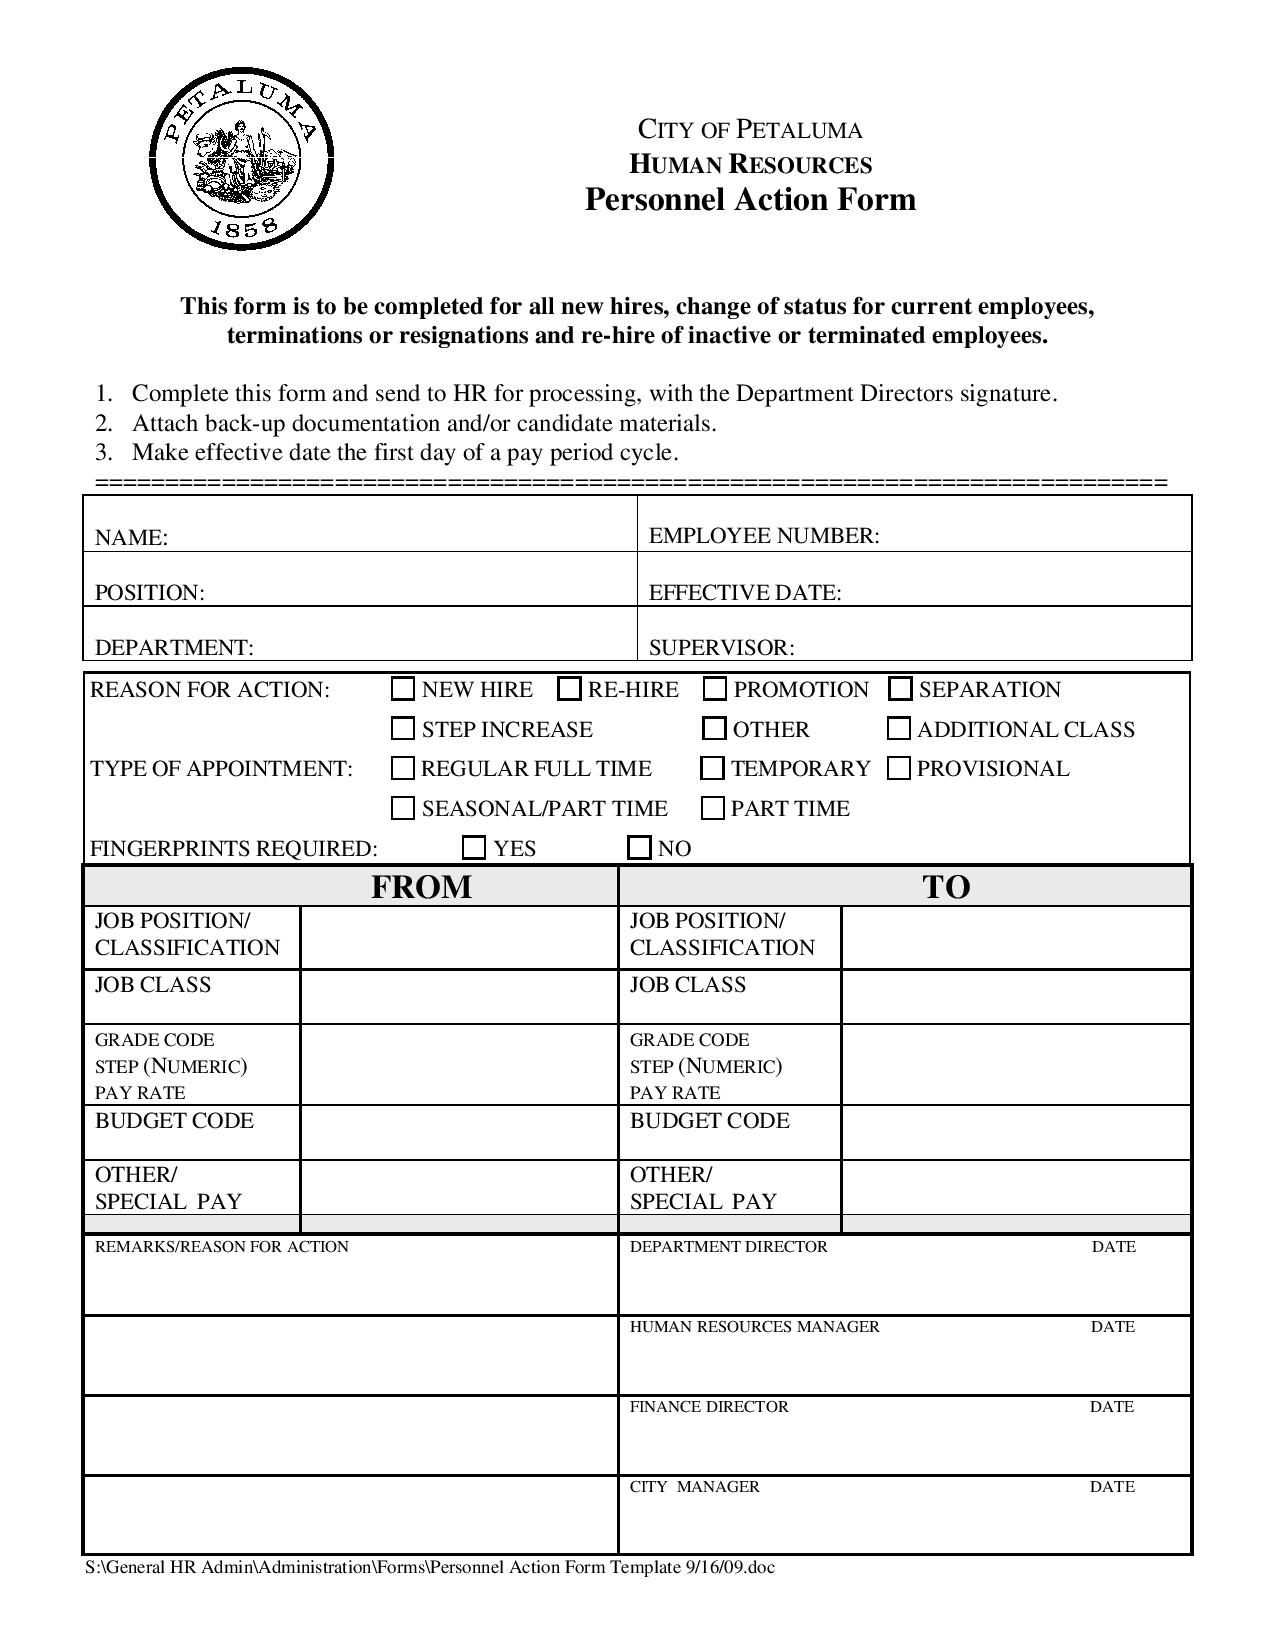 personnel action form status change1